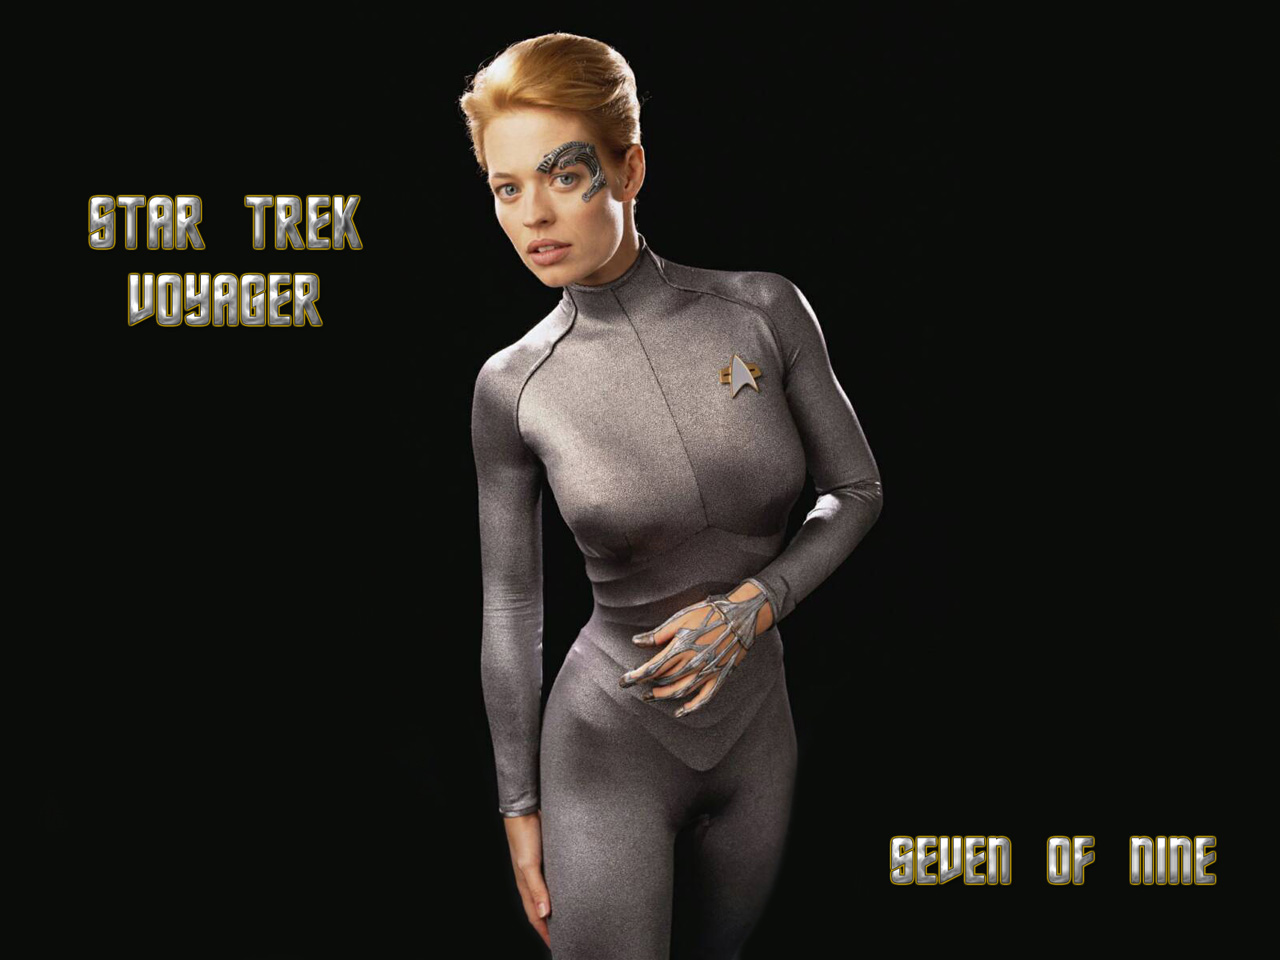 - Star Trek Voyager Seven Of Nine - free Star Trek computer desktop wallpaper, pictures, images.